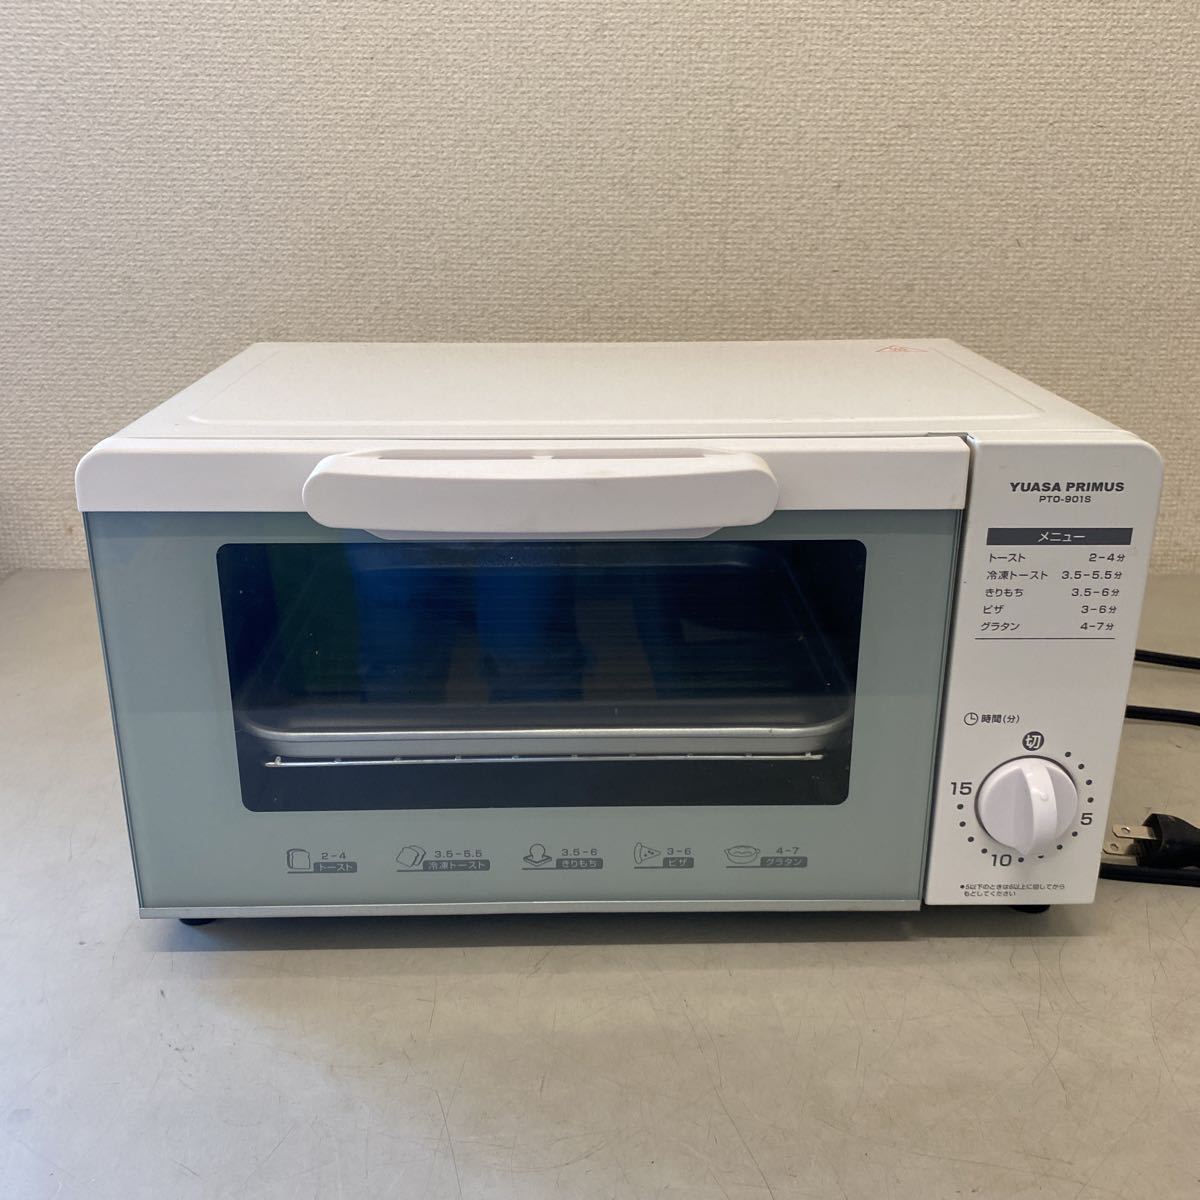 YUASA PRIMUS オーブントースター PTO-901S 2019年製 ※動作確認済 汚れあり。_画像1